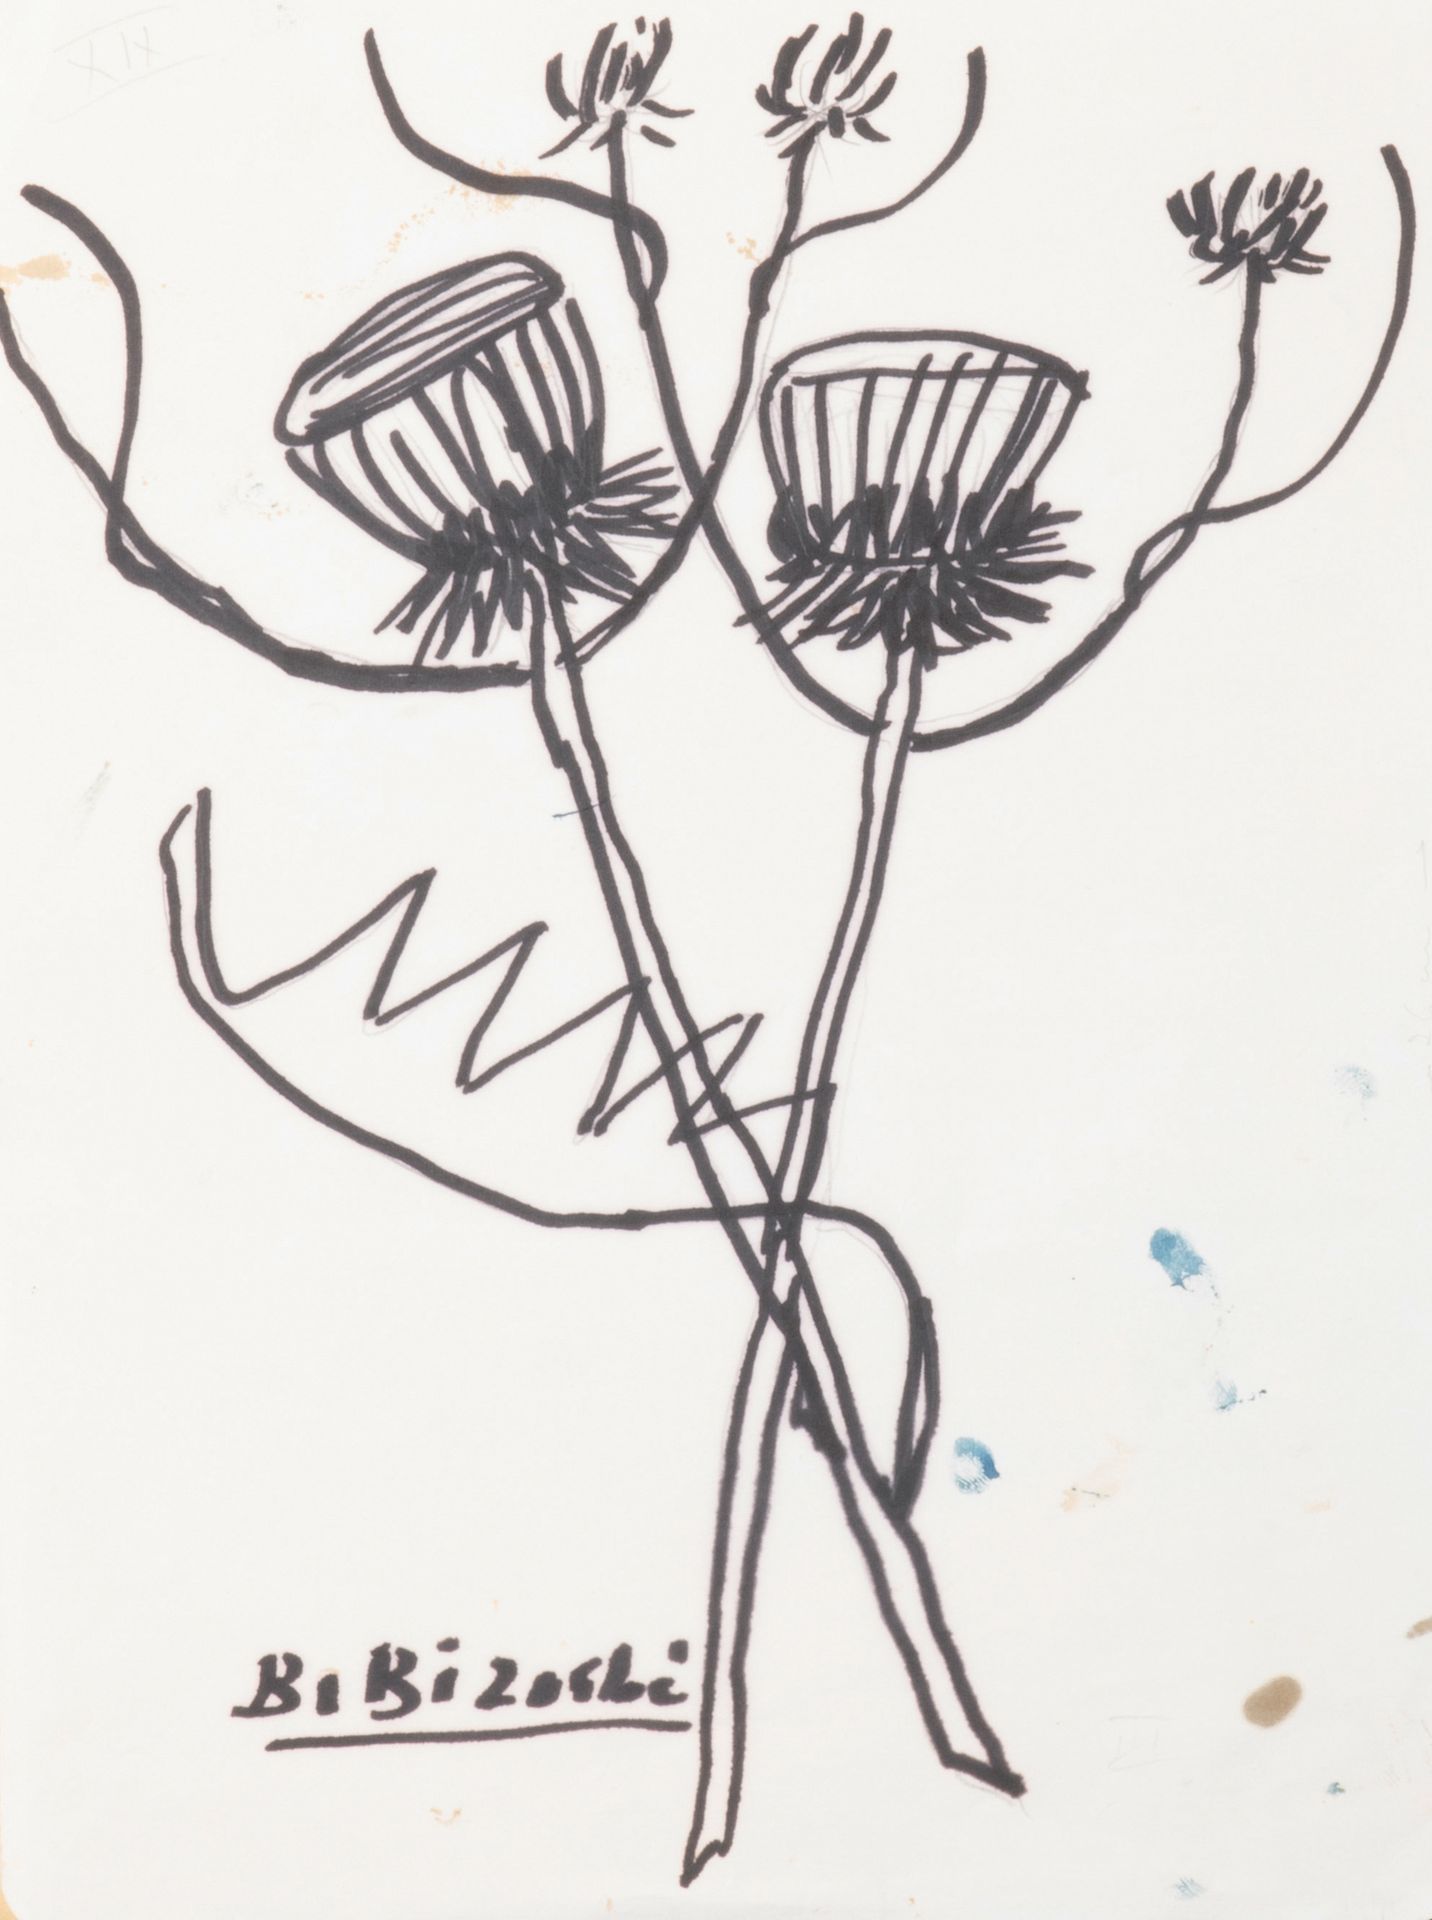 BIBI ZOGBE (1890-1973) Thistles
纸上铅笔和水墨画，左下角有签名，污渍31 x 23厘米